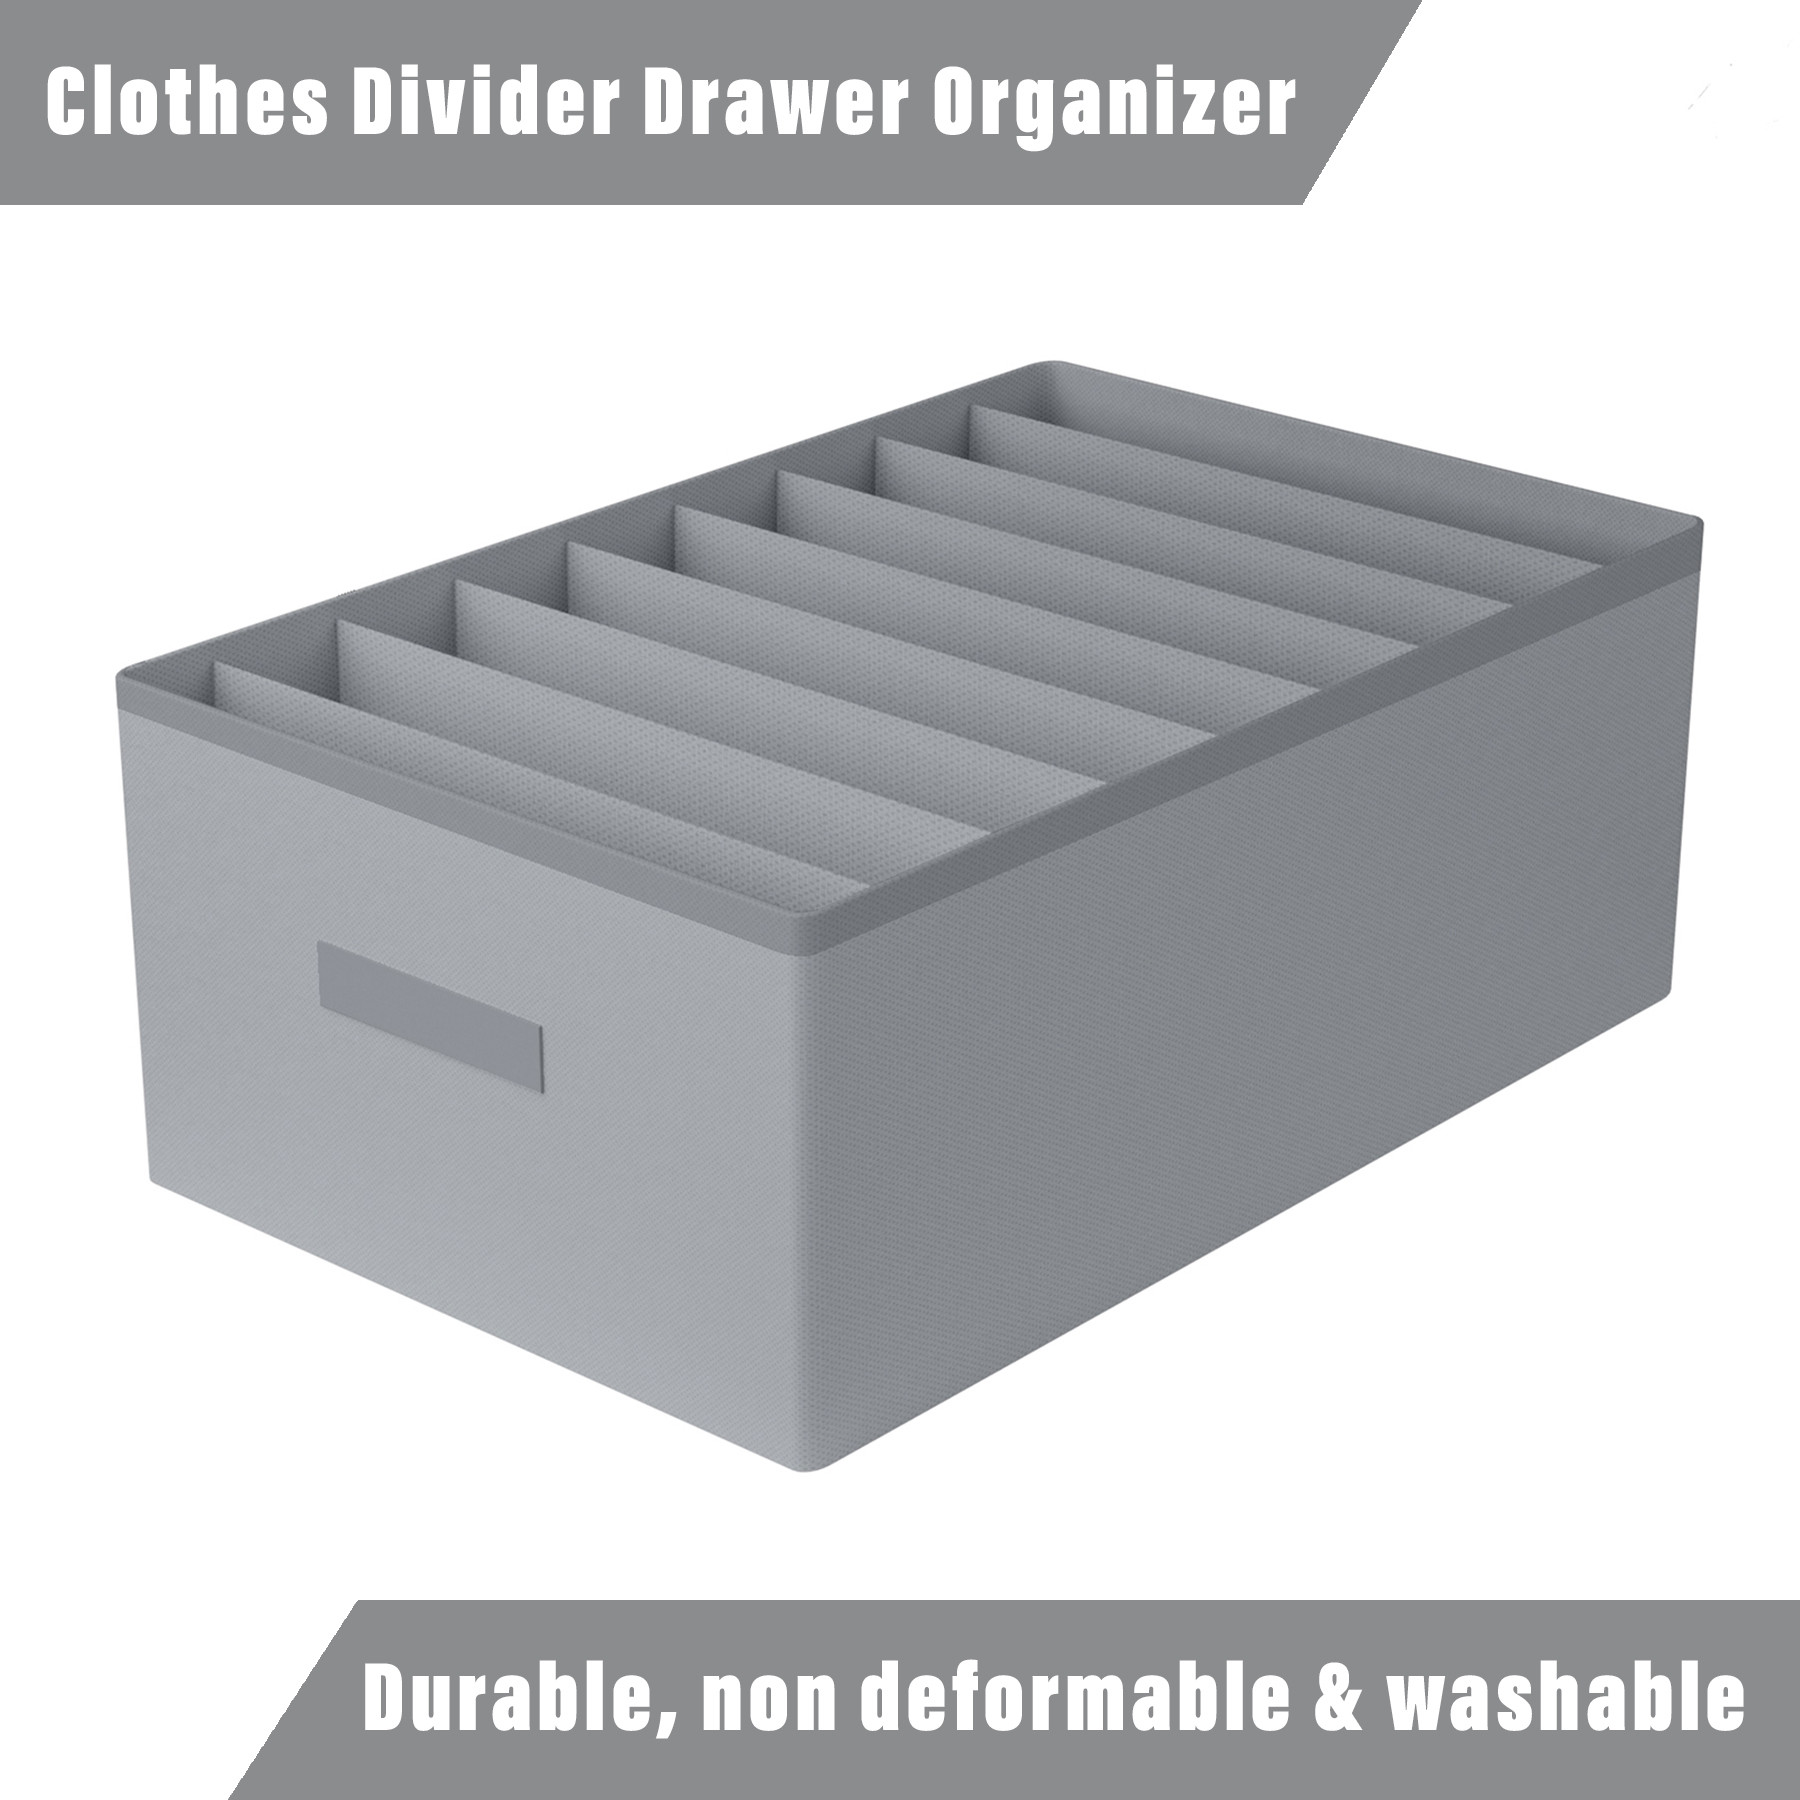 Kuber Industries Trouser Box | Wardrobe Organizer | Clothes Organizer | Storage Box for Pants-Shirt-Sweaters-Bra Panty-Socks | 9-Grid Closet Organizer | Plain | Large | Gray